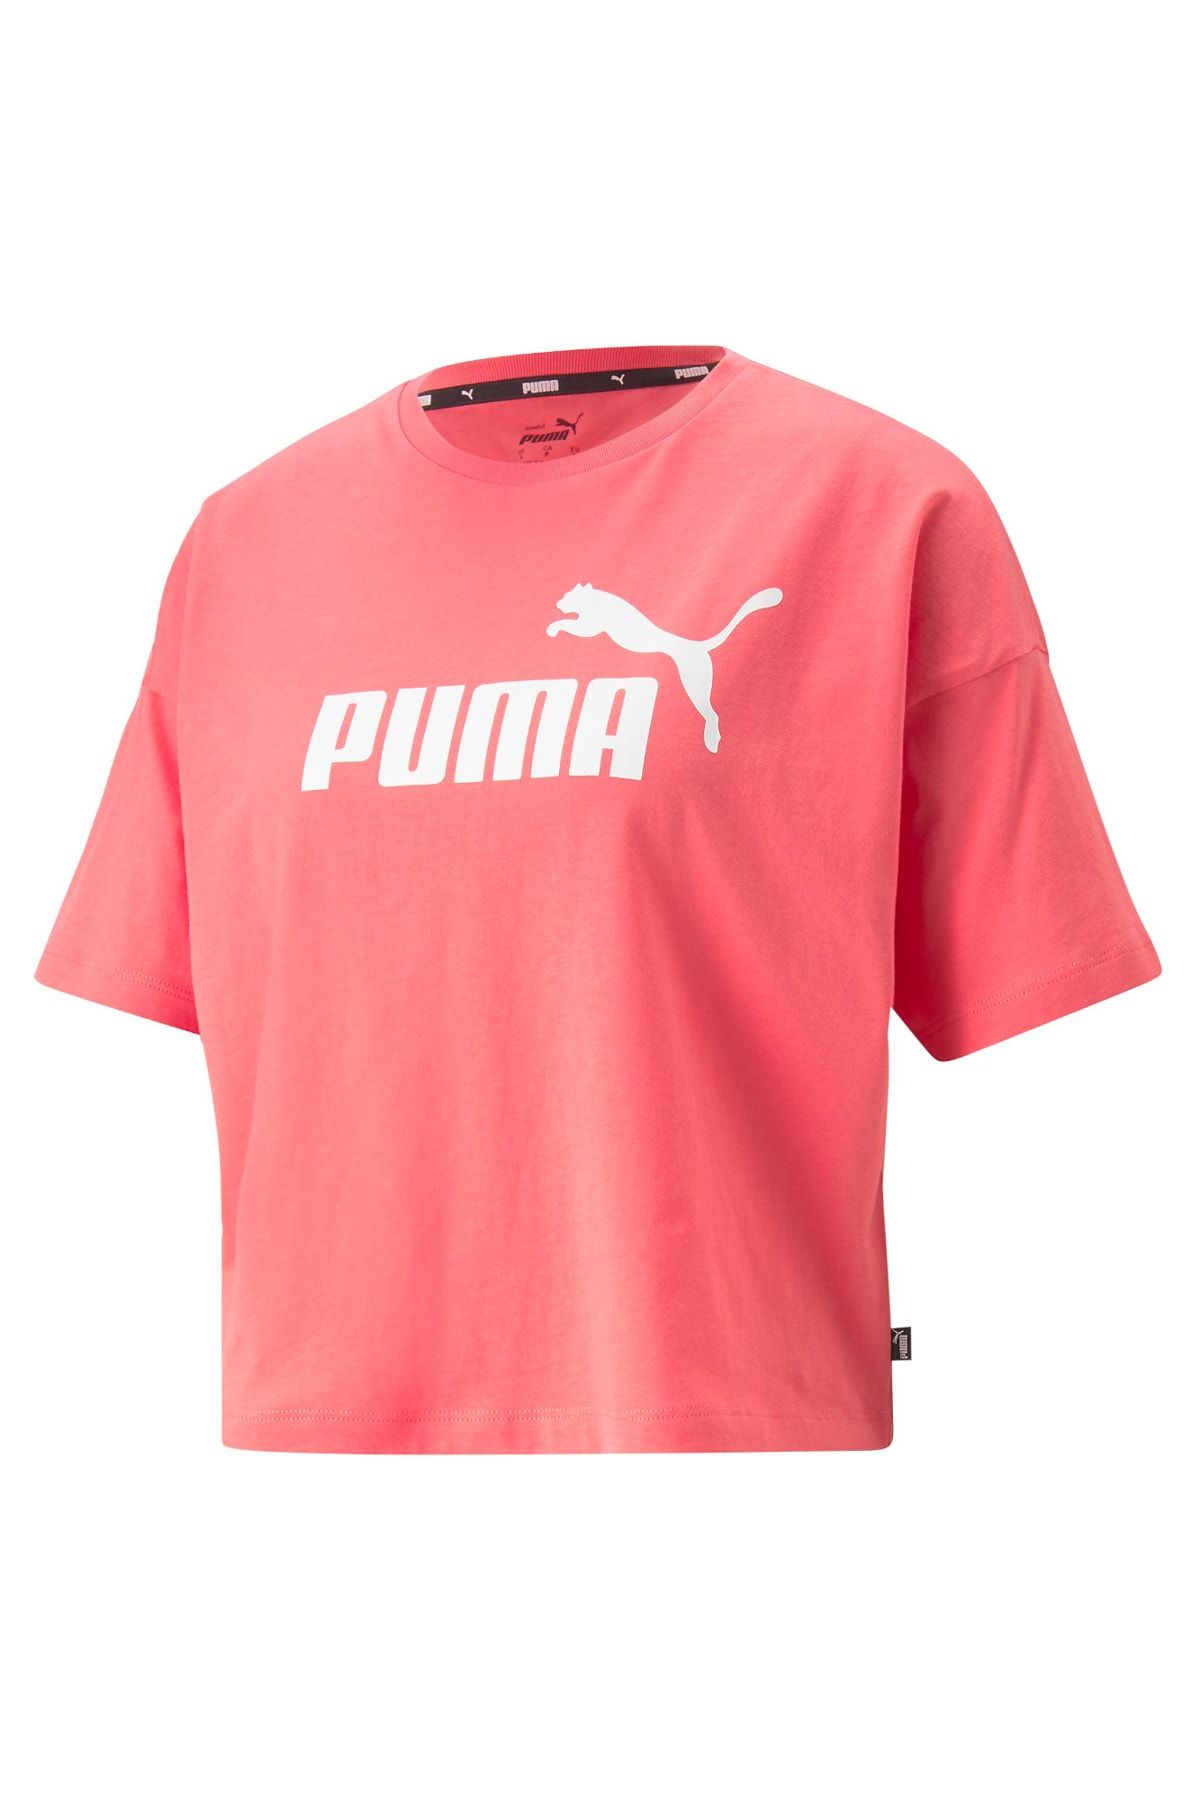 Puma T-Shirt Women/Girls - Trendyol